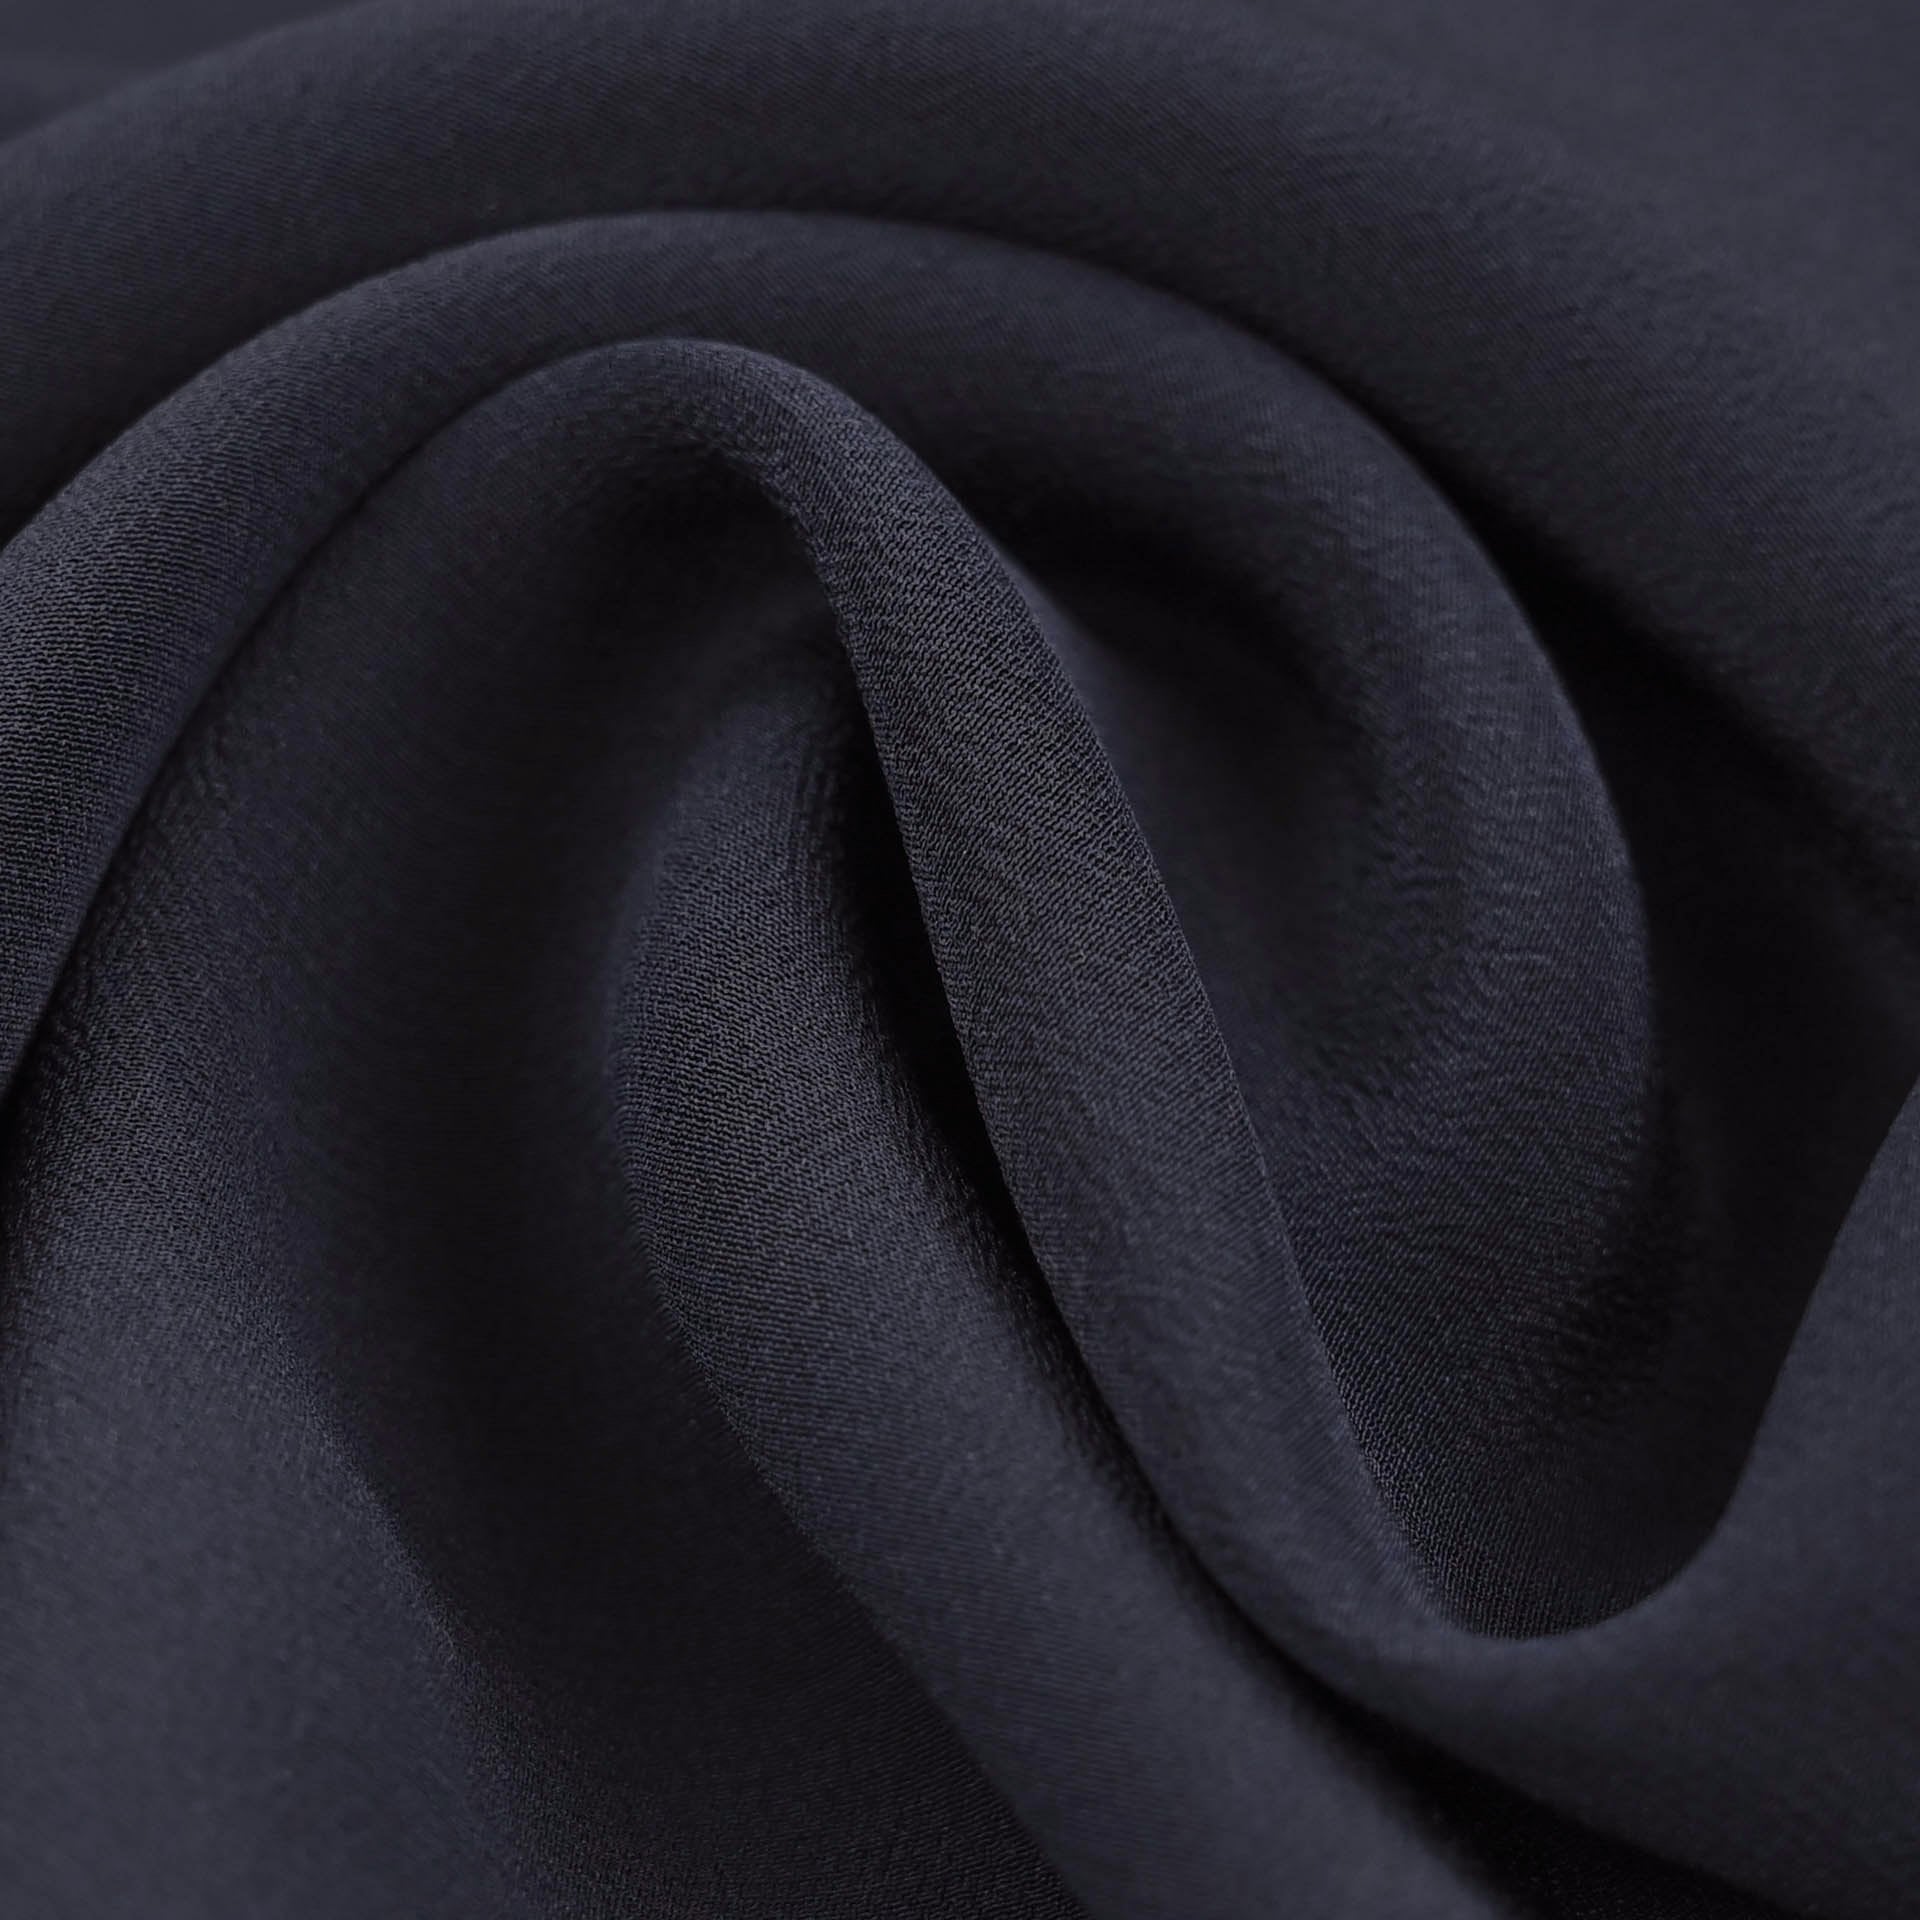 Midnight Chiffon Silk Fabric 98881